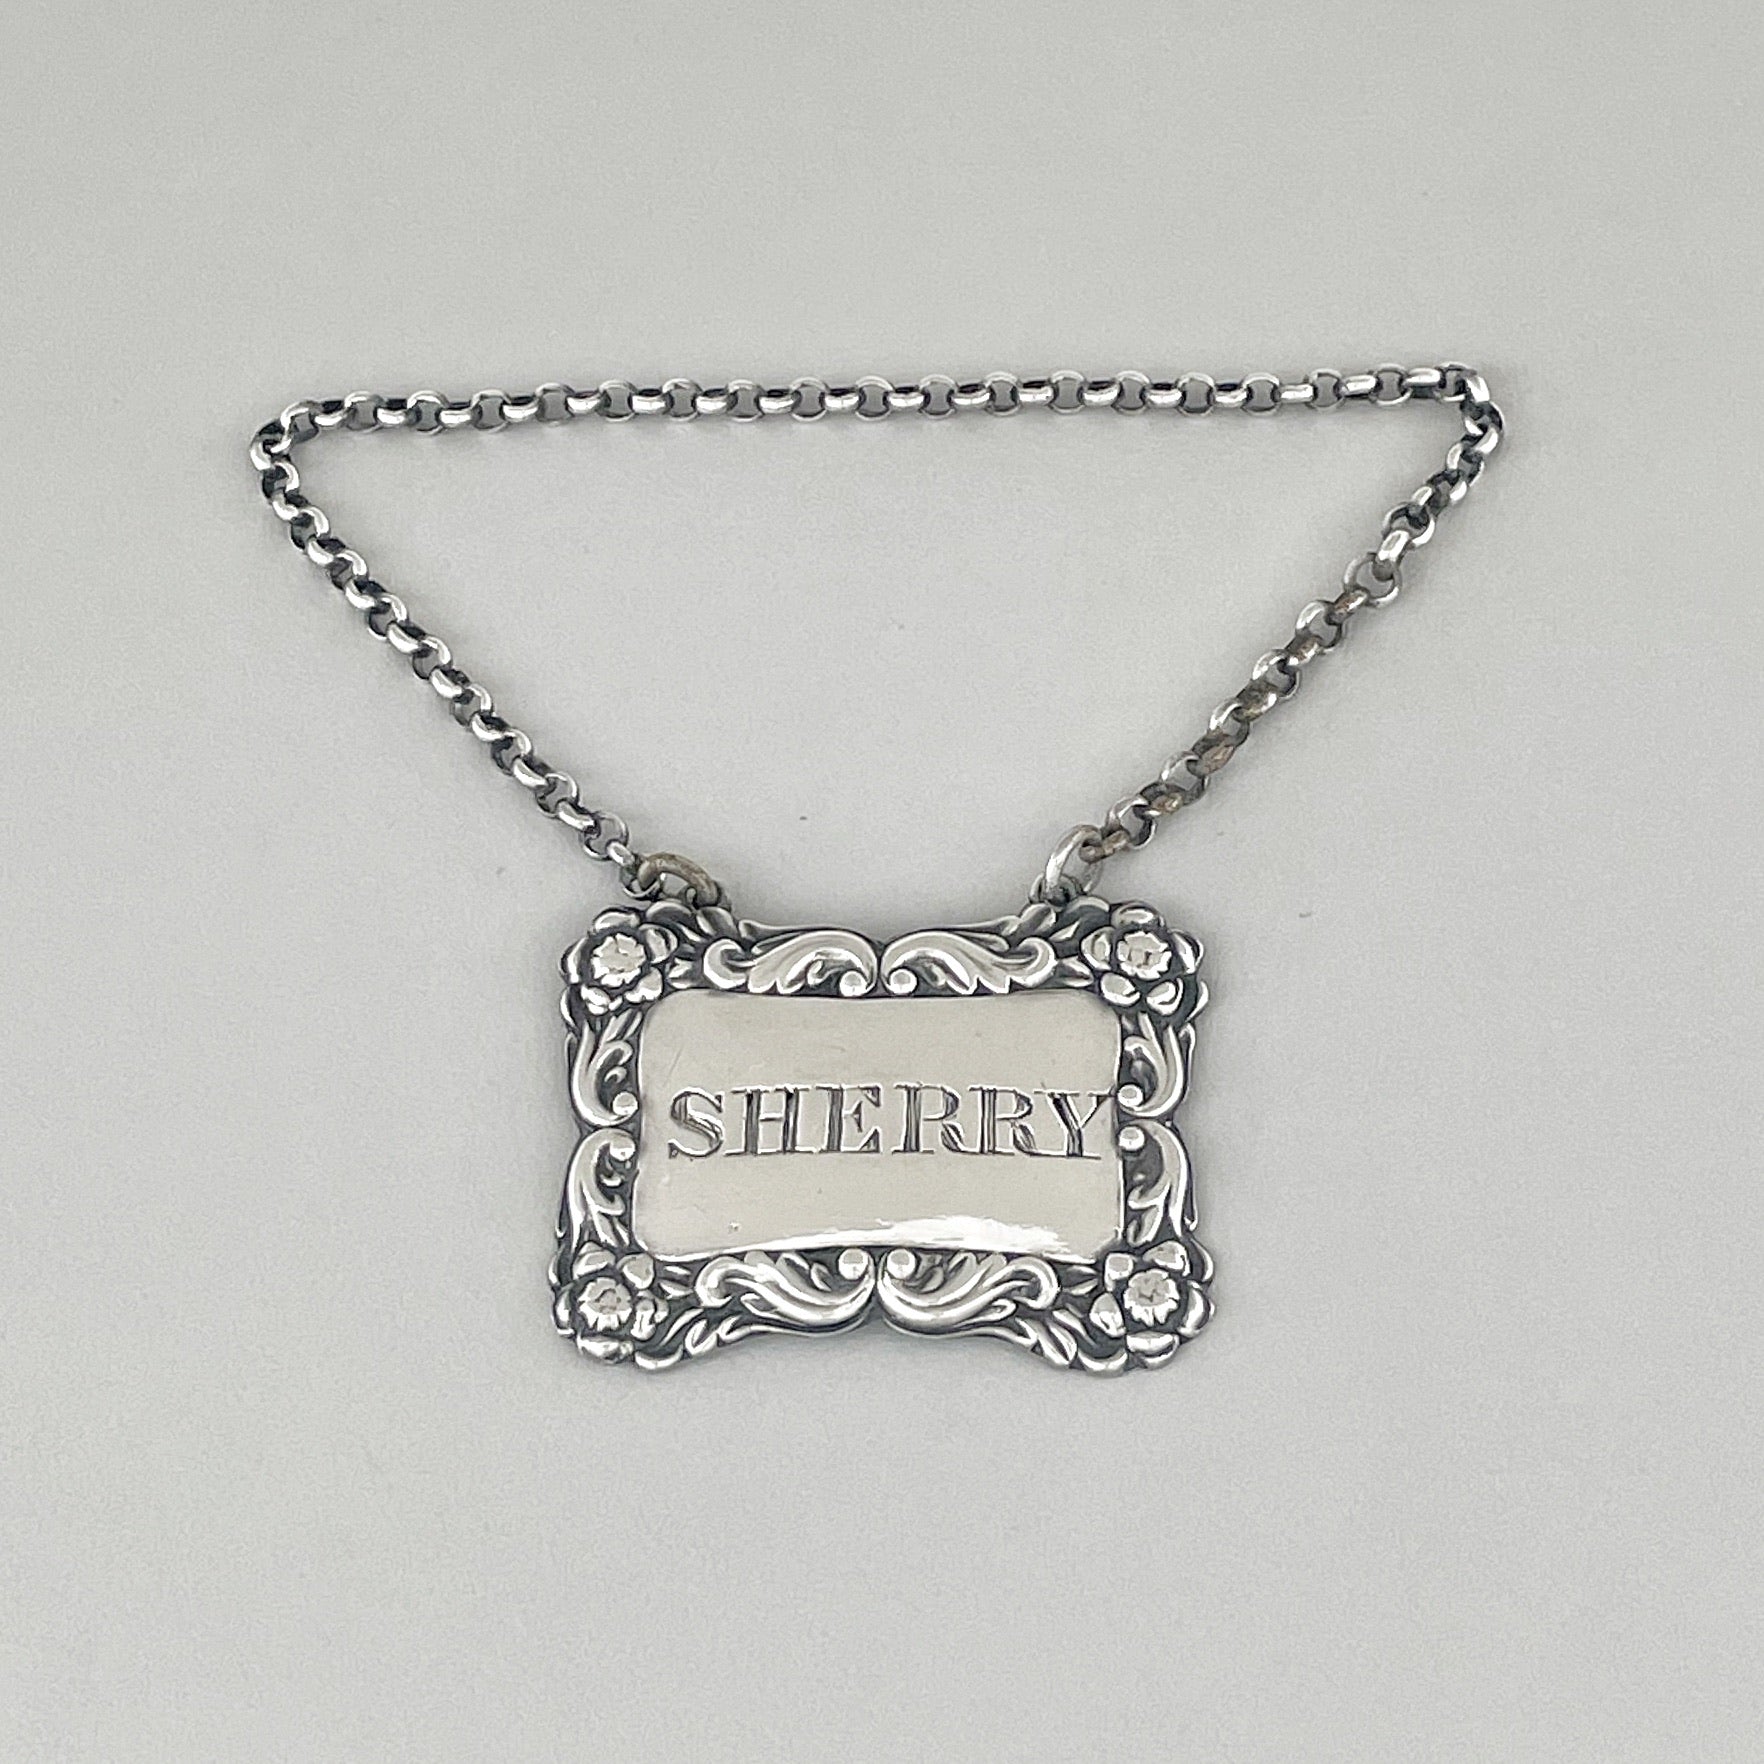 Scottish Sterling Silver Bottle Label or Tag, "Sherry", Edinburgh, 1820-1821